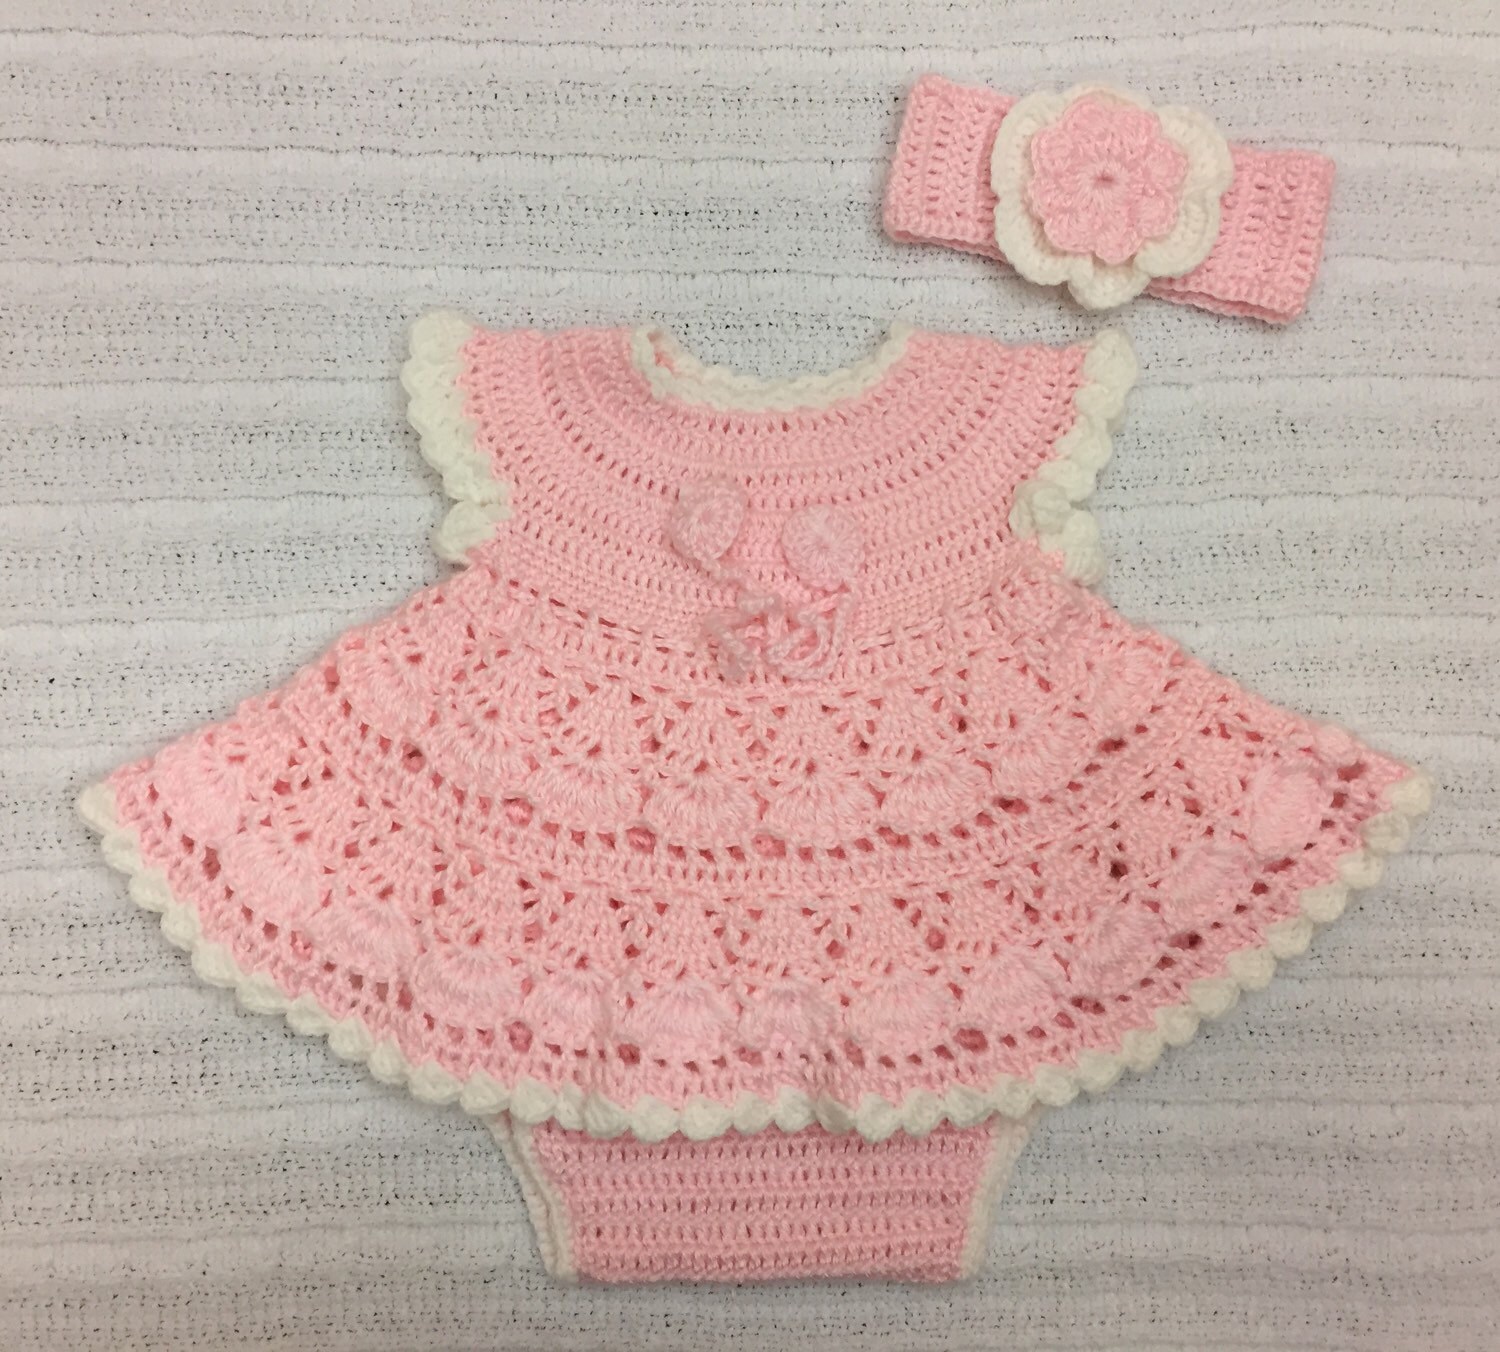 Crochet newborn dress set with matching headband and diaper